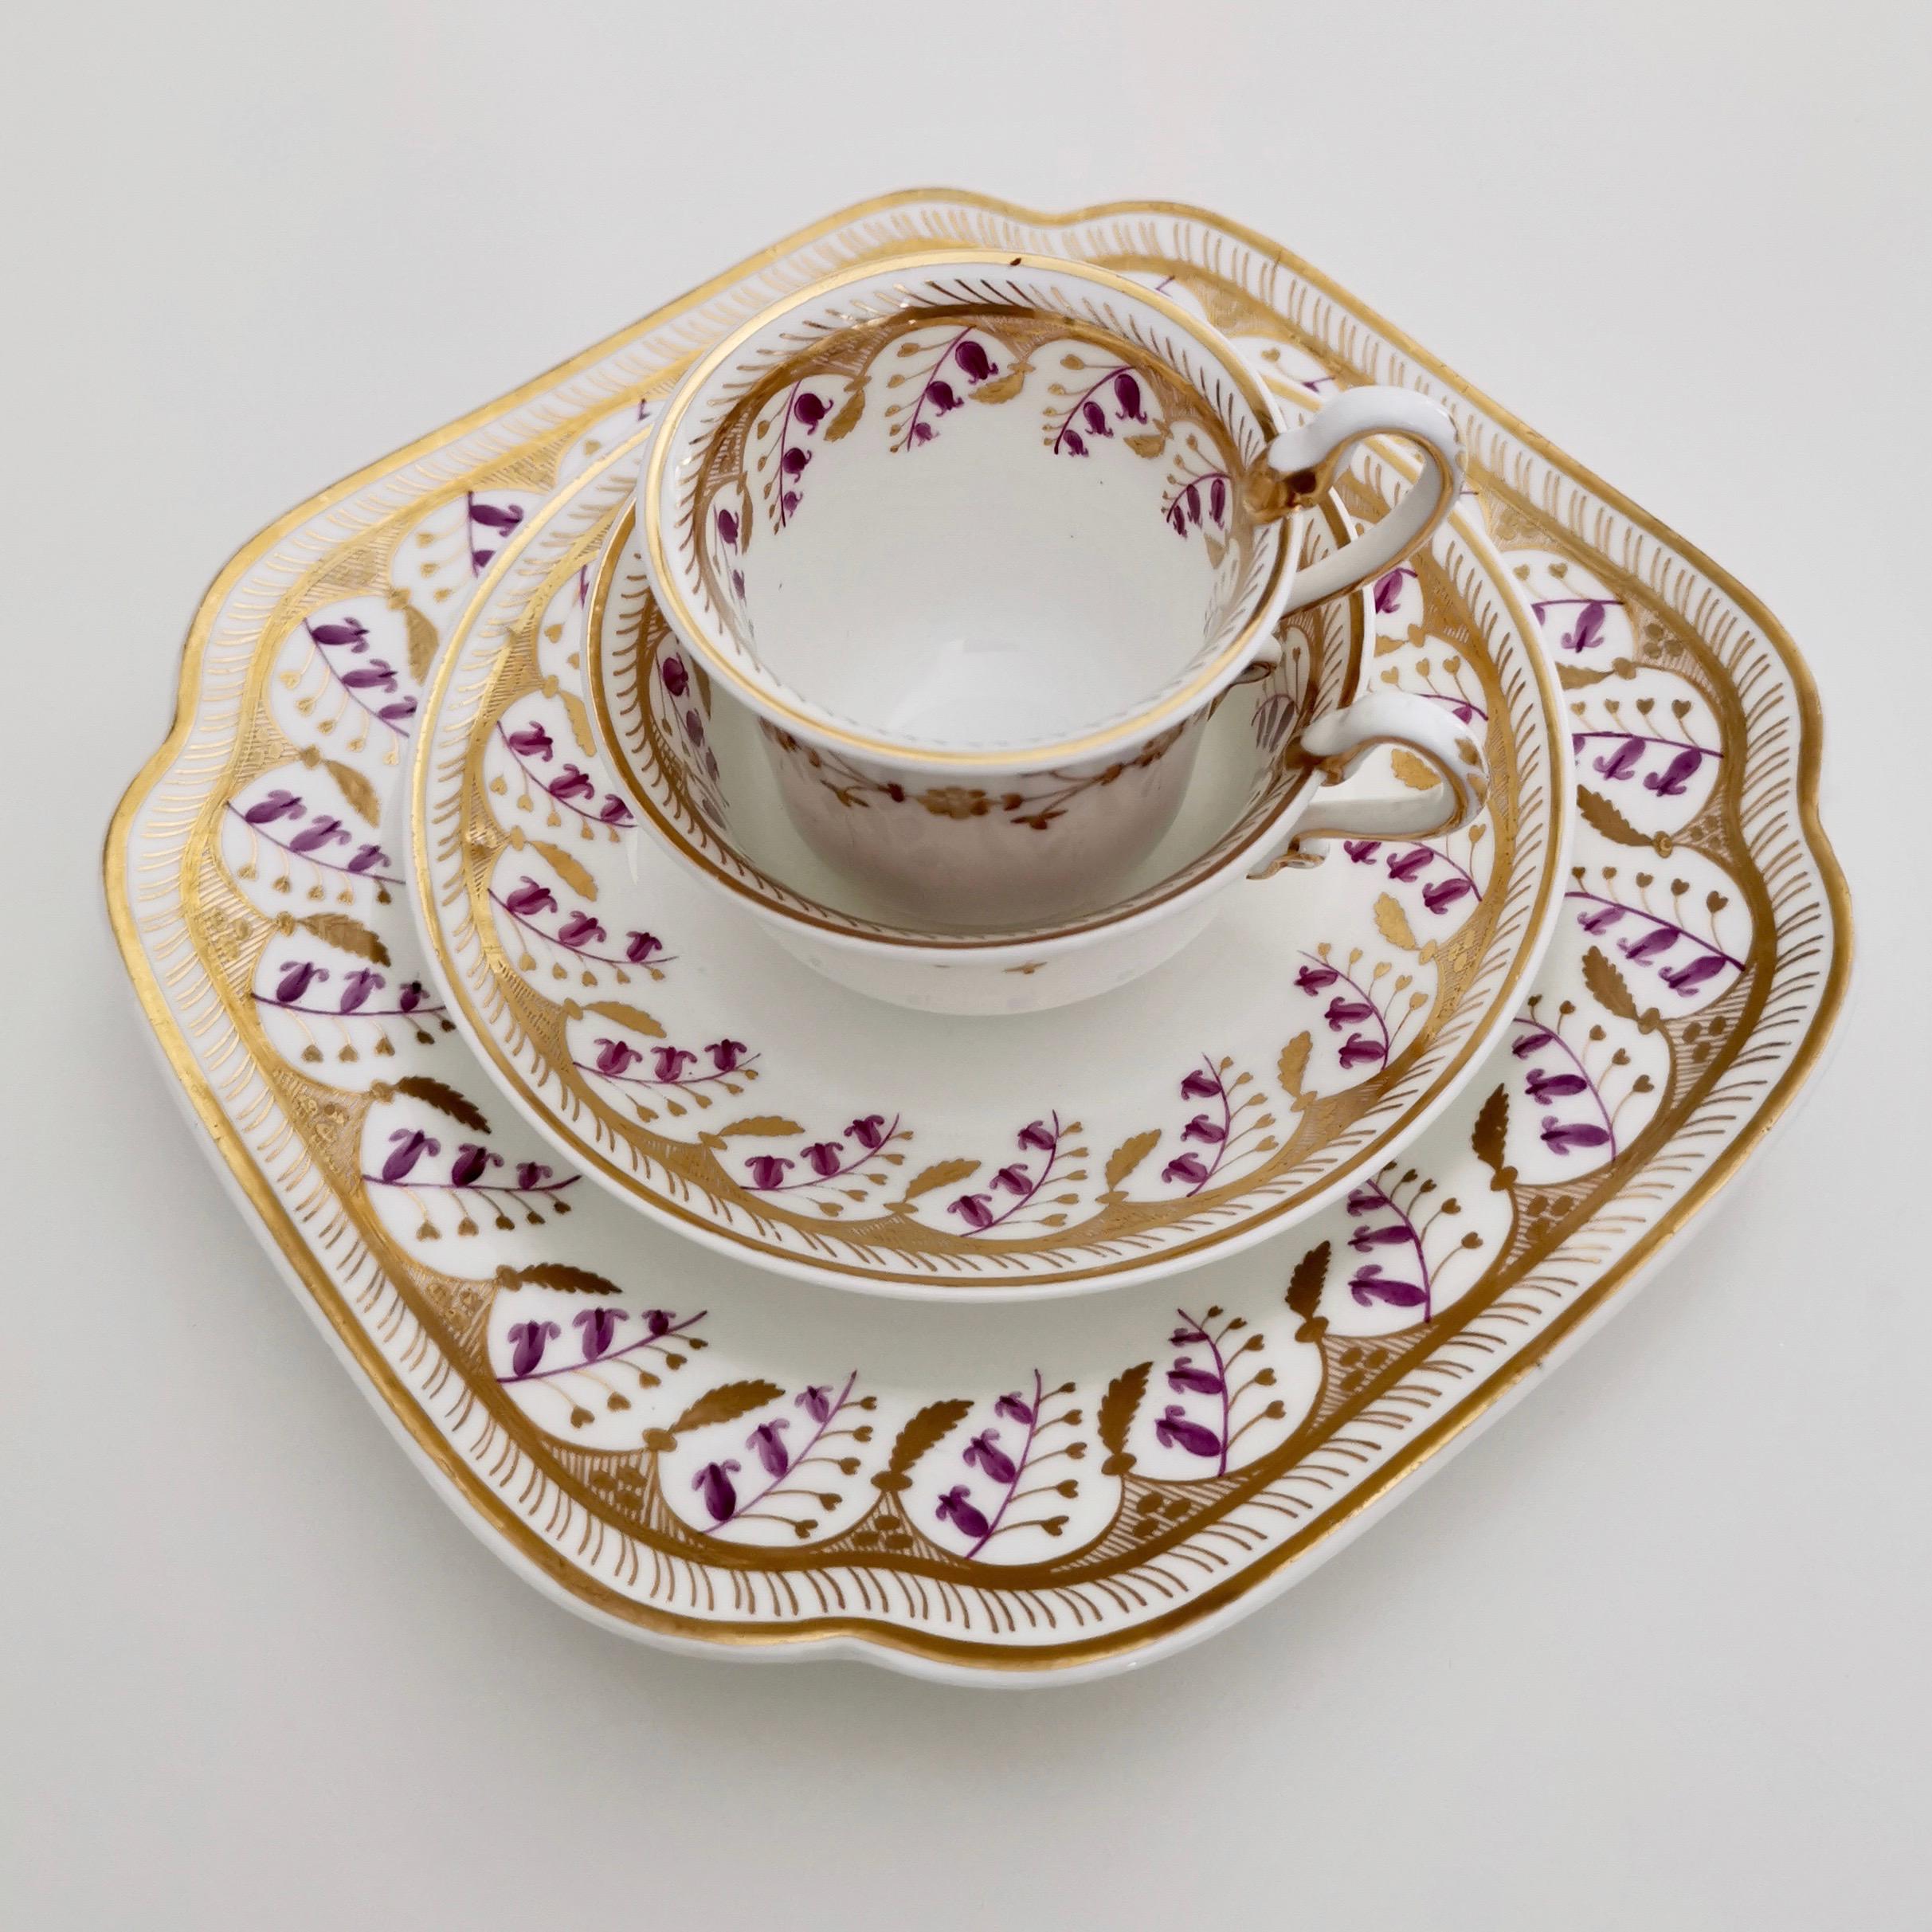 Spode Felspar Porcelain Teacup Trio, White with Harebell Pattern, Regency, 1826 10